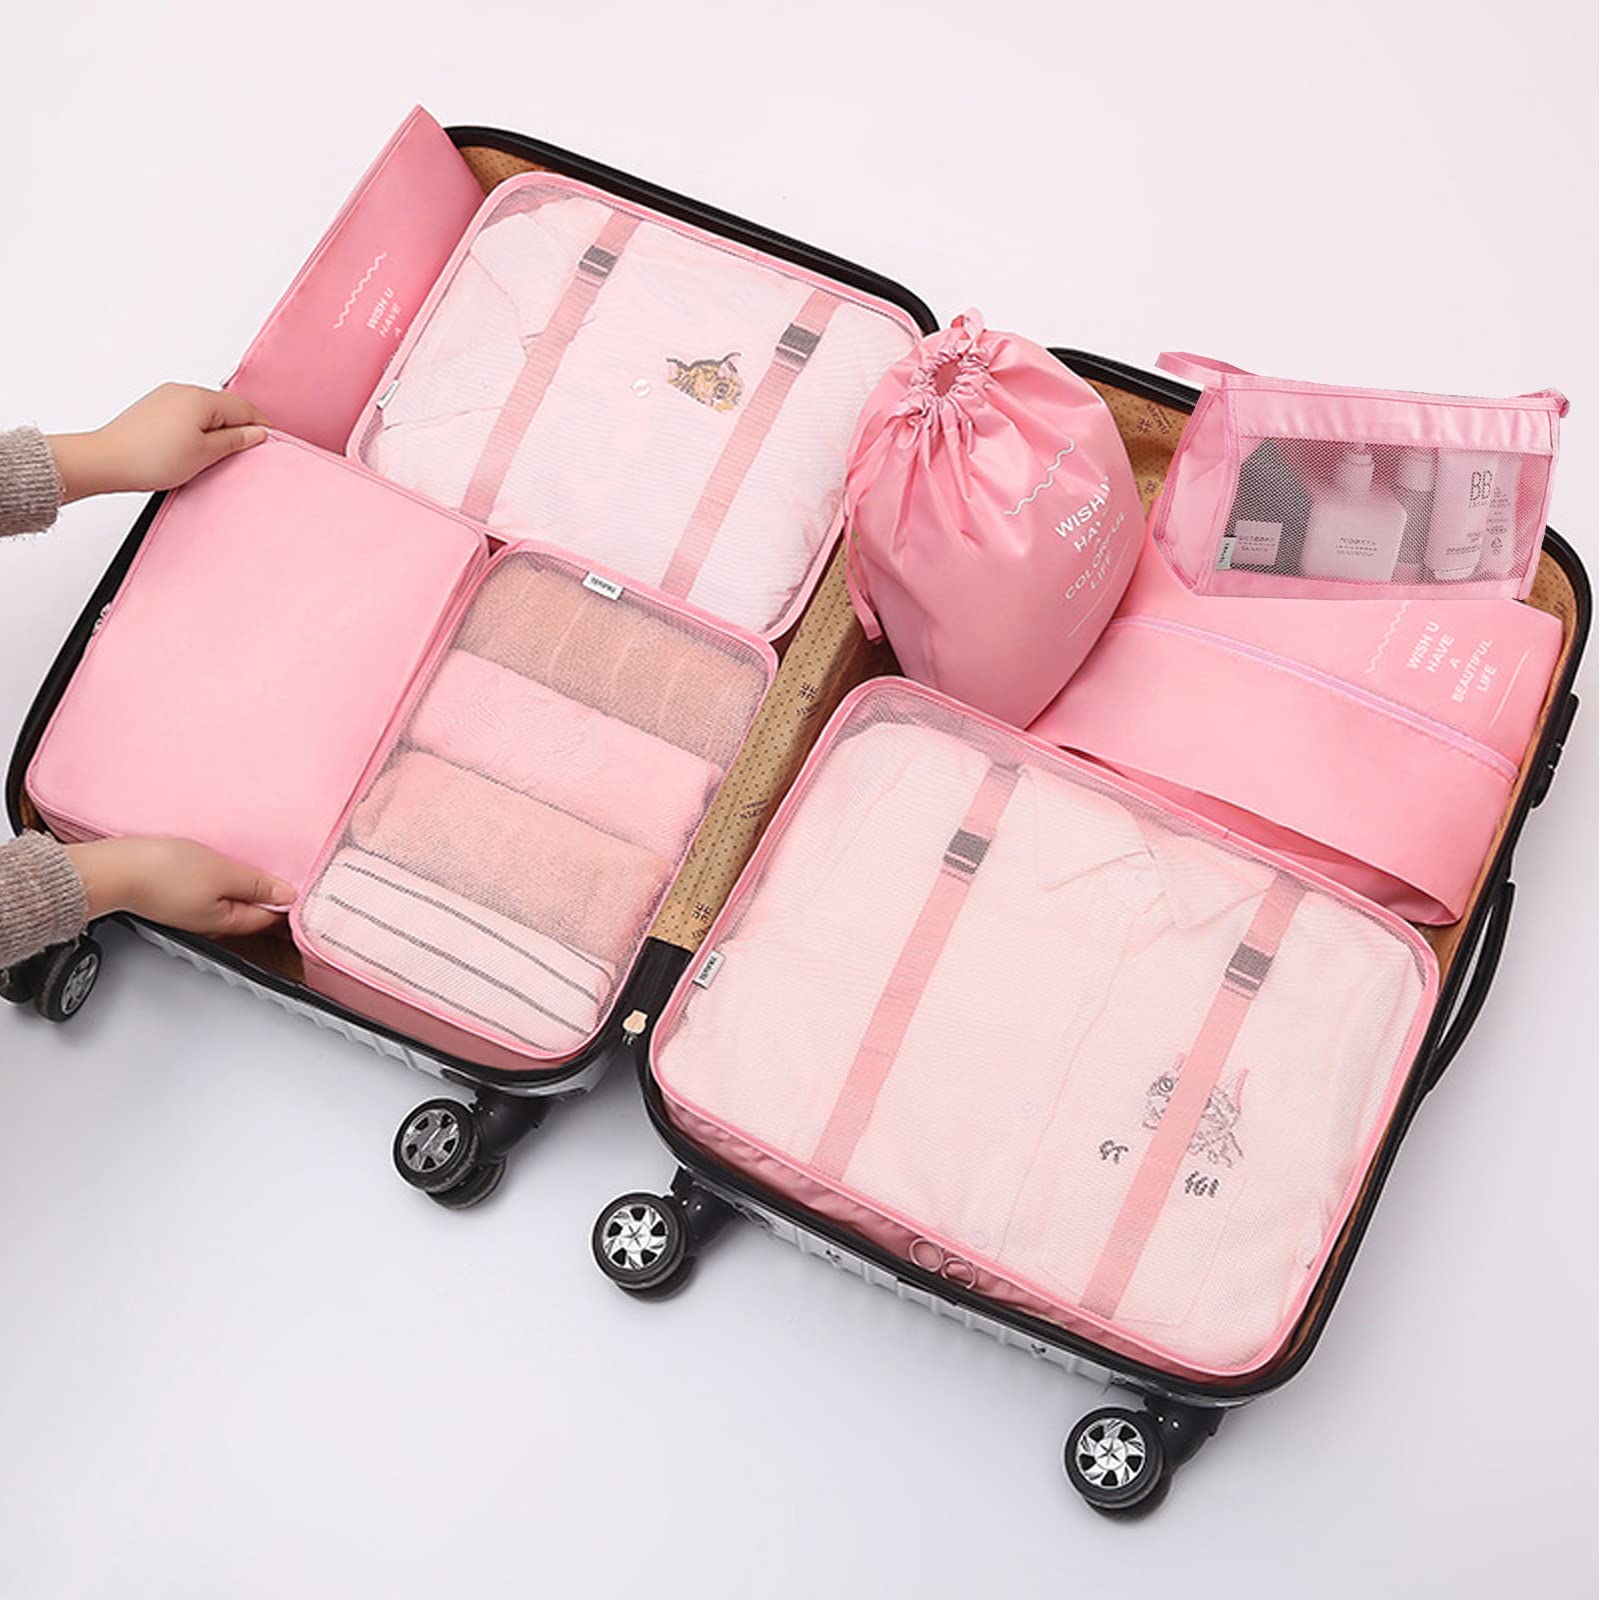 8 piece travel luggage sets